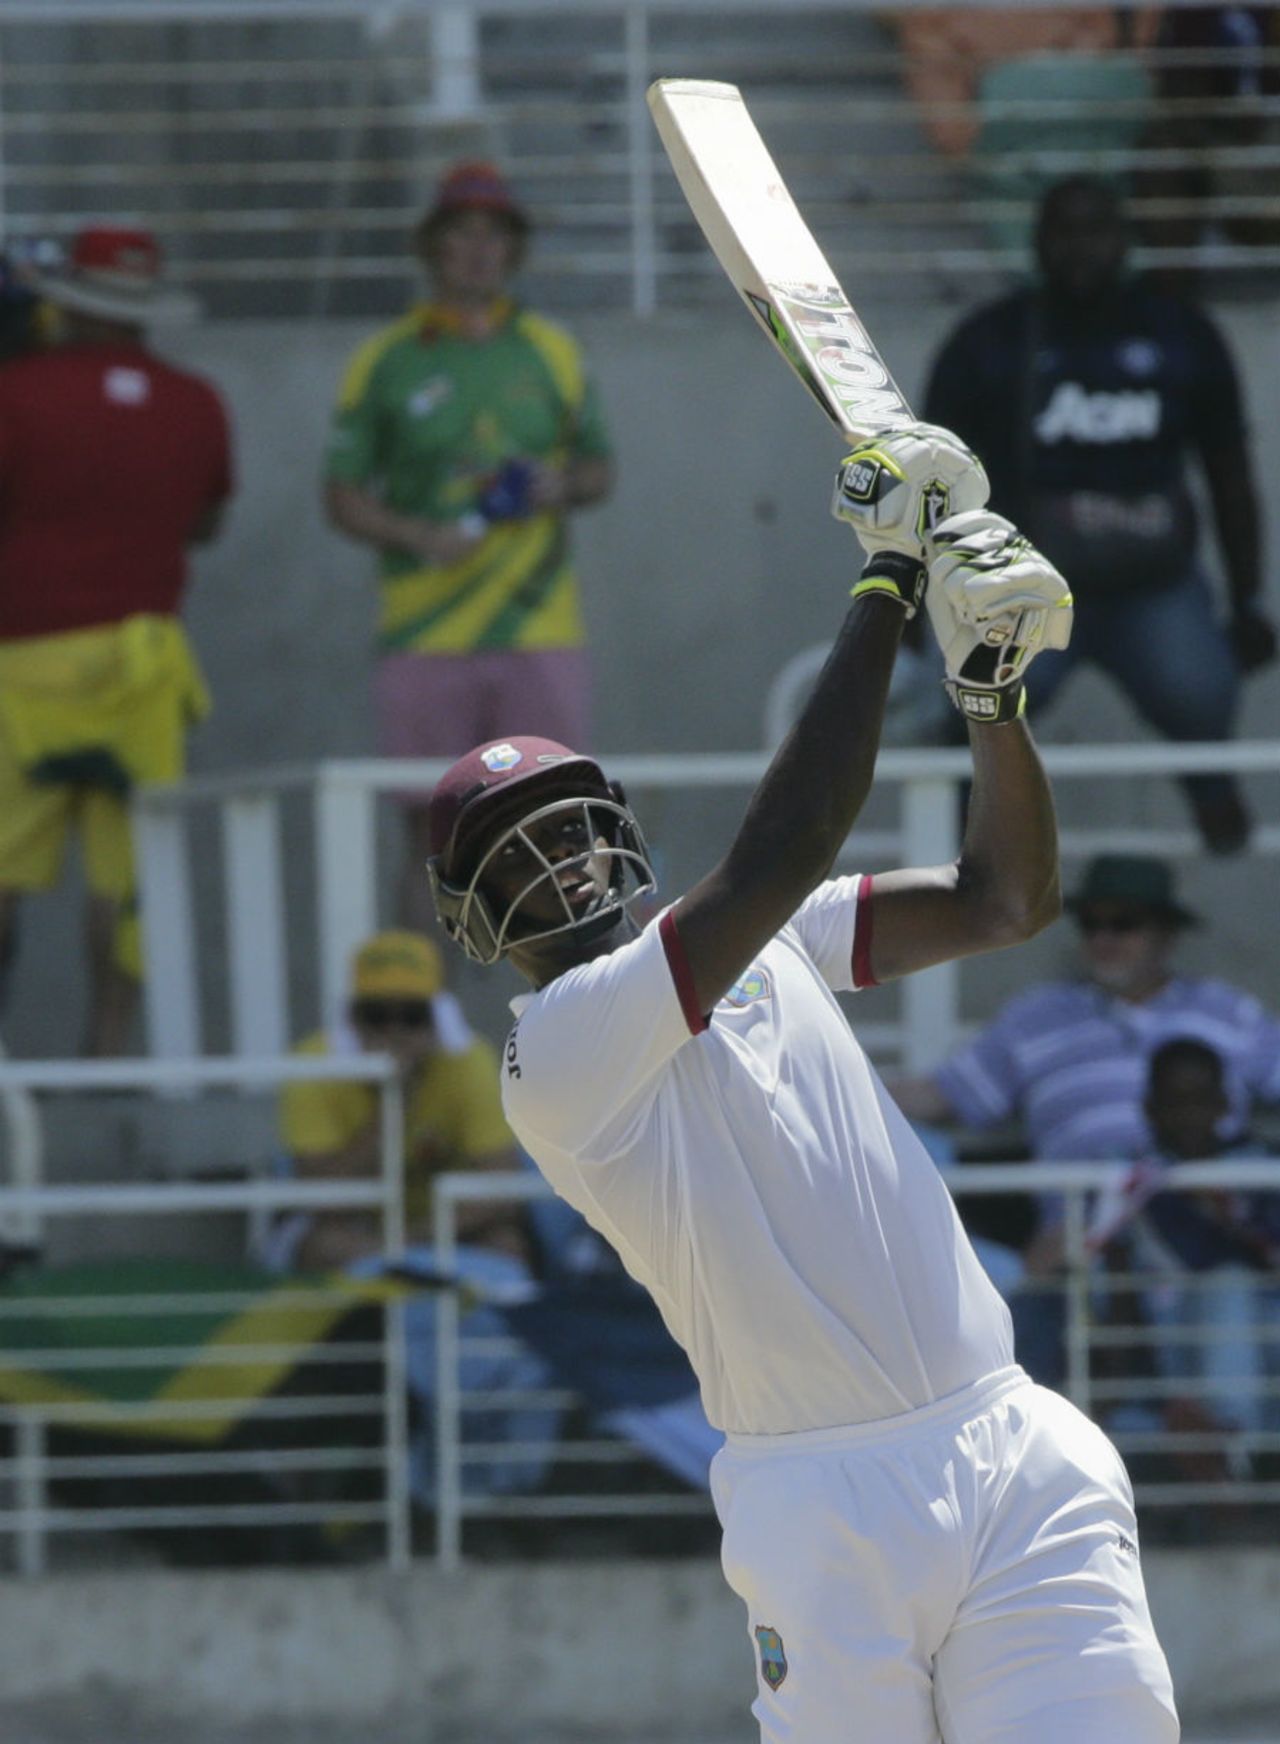 Jason Holder hits over the top, West Indies v Australia, 2nd Test, Kingston, 3rd day, June 13, 2015